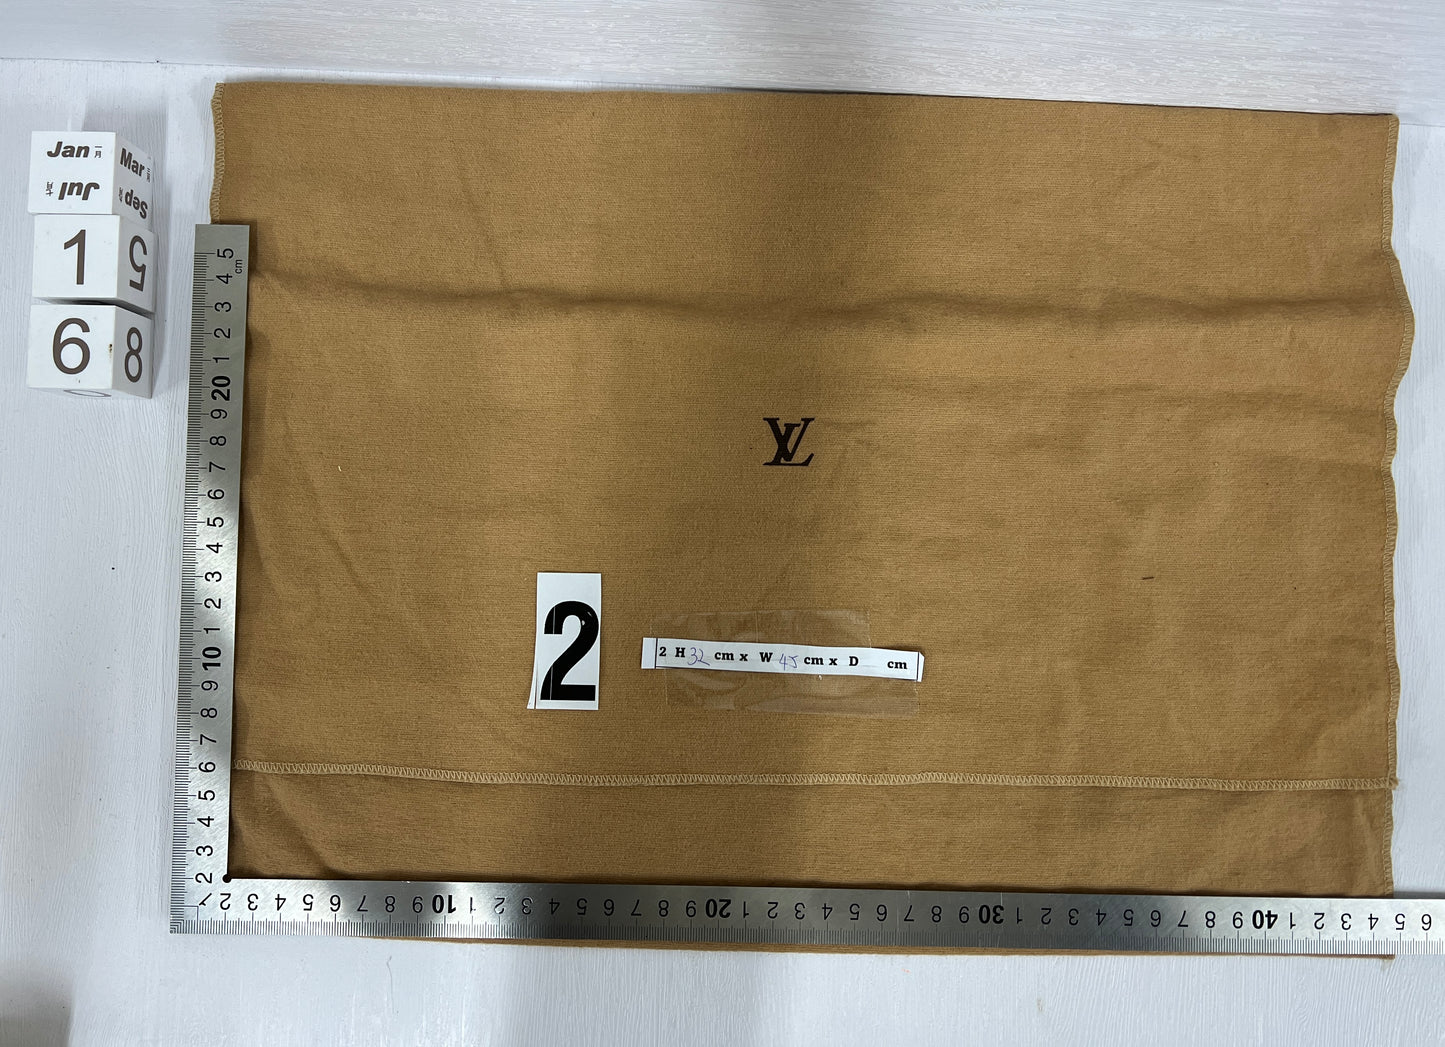 Louis Vuitton LV 防塵袋珠寶錢包袋手錶手提包 - 29JAN